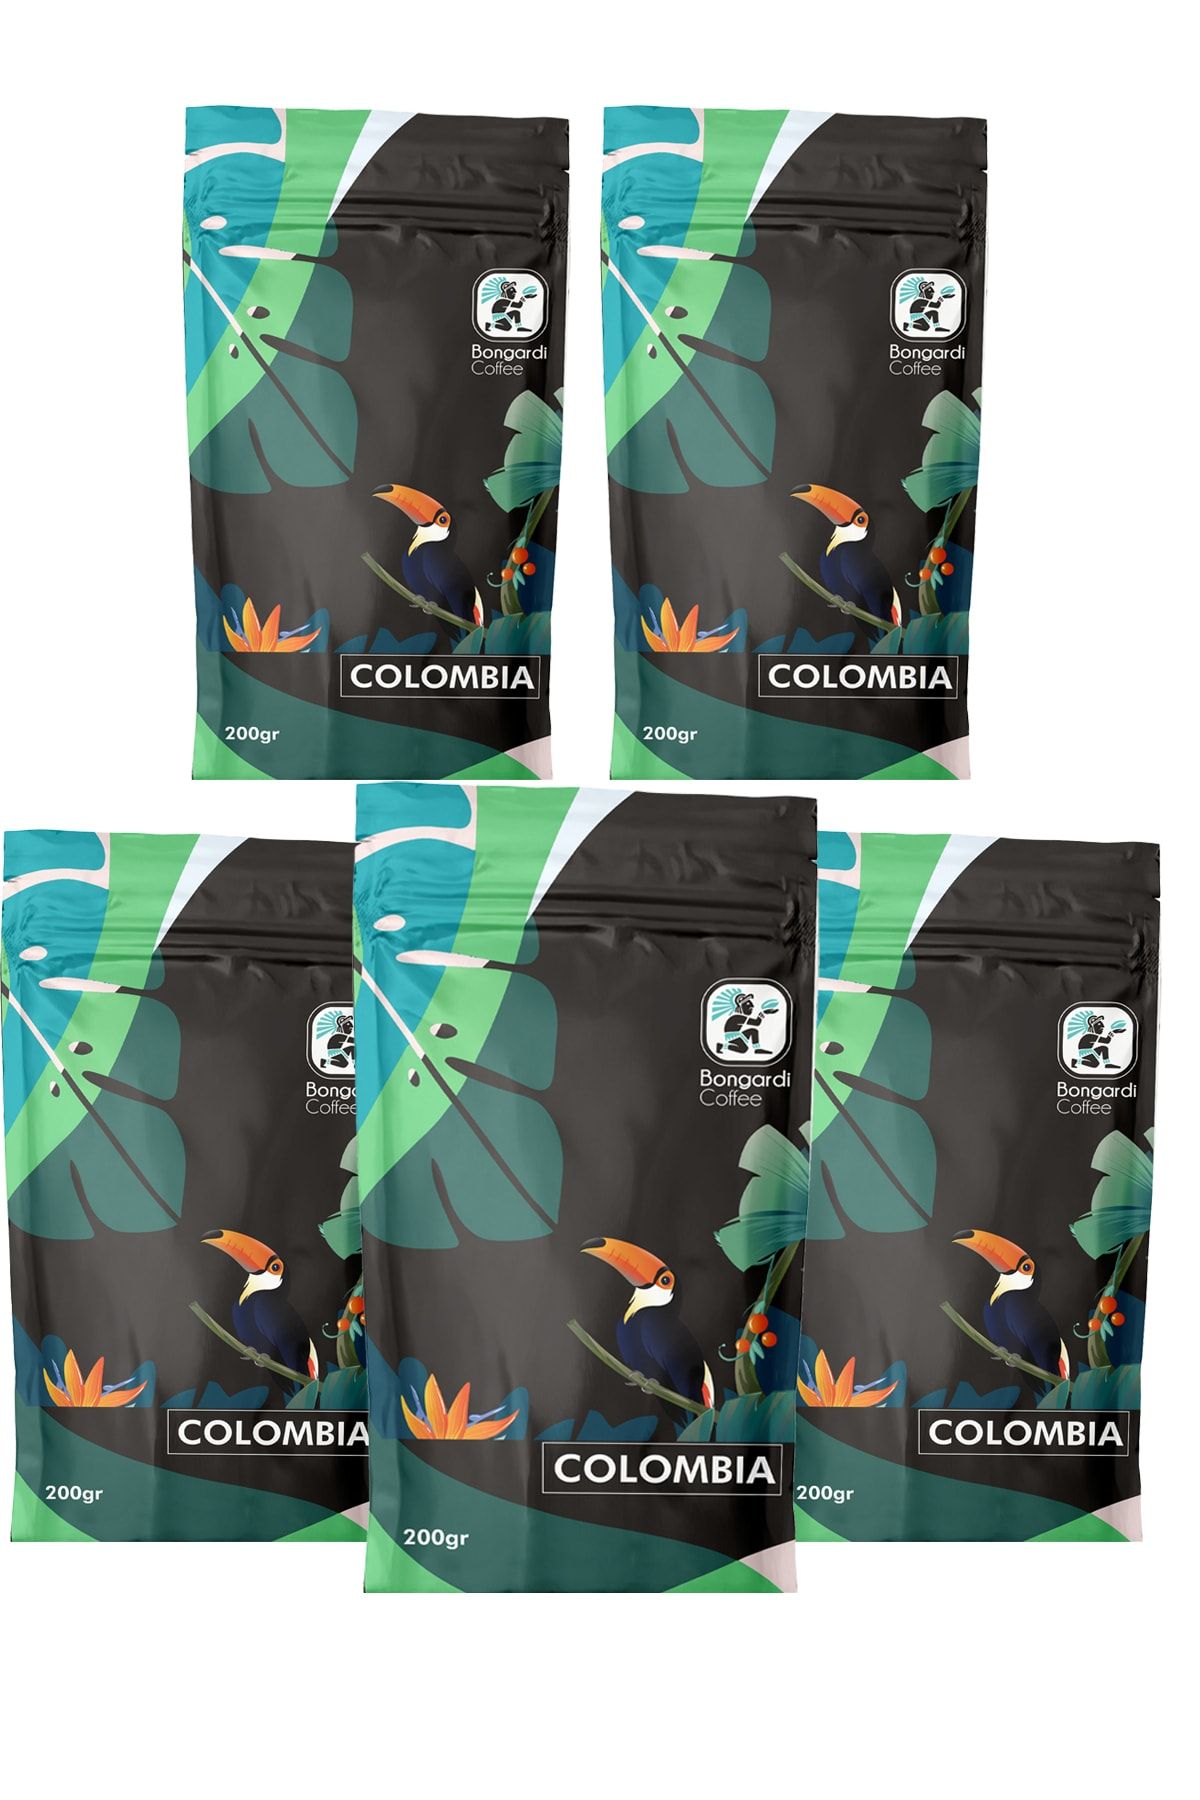 Bongardi Coffee 5x200 gram Colombia Yöresel Filtre Kahve Makinesi Uyumlu Kolombiya